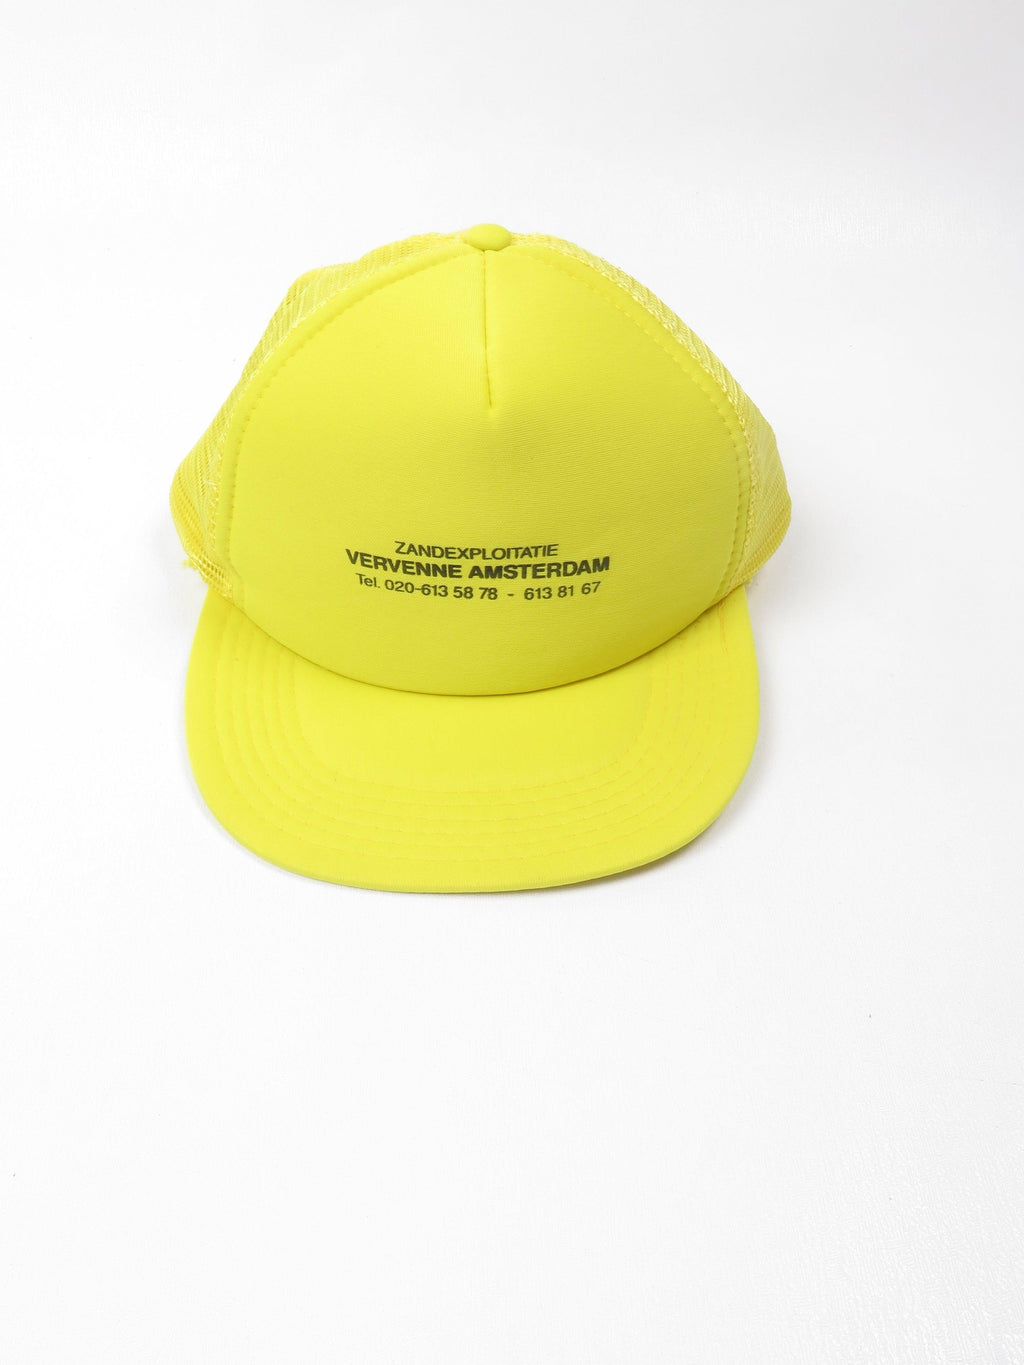 Vintage Yellow Snapback Baseball Cap - The Harlequin